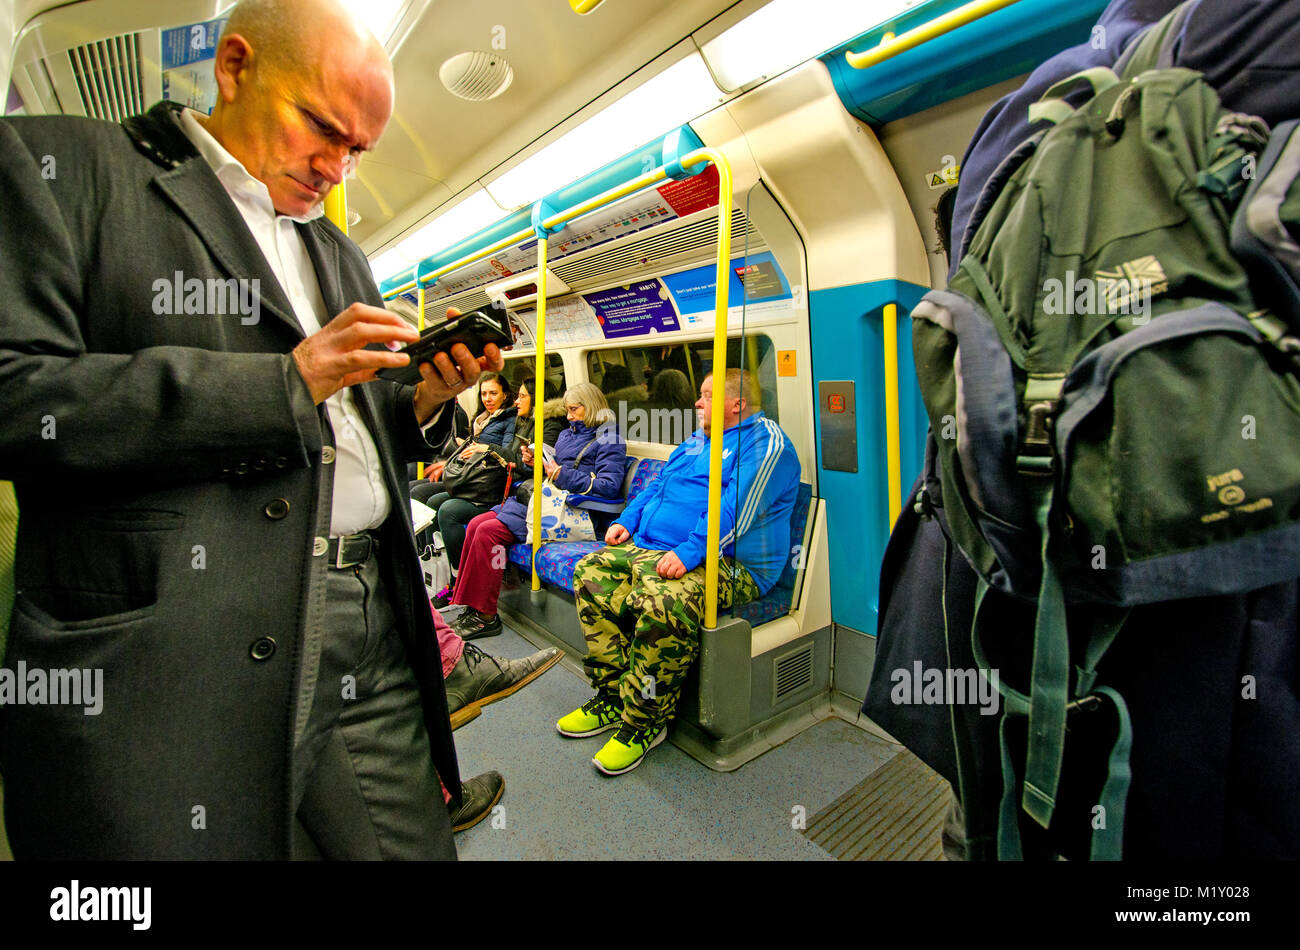 London, England, UK. Commuters on a tube train Stock Photo